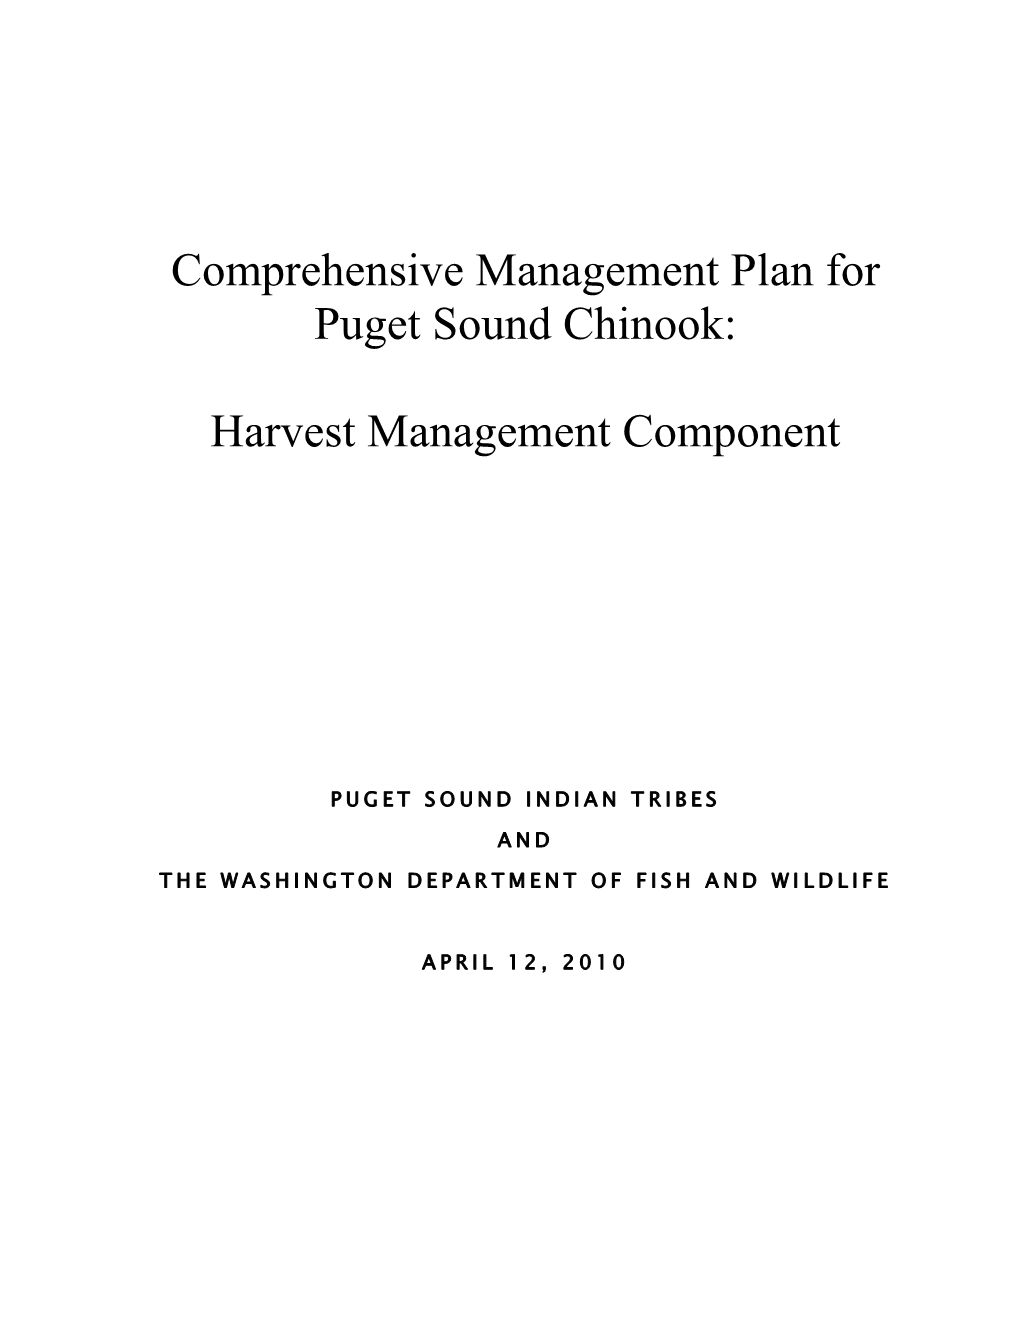 Comprehensive Management Plan for Puget Sound Chinook